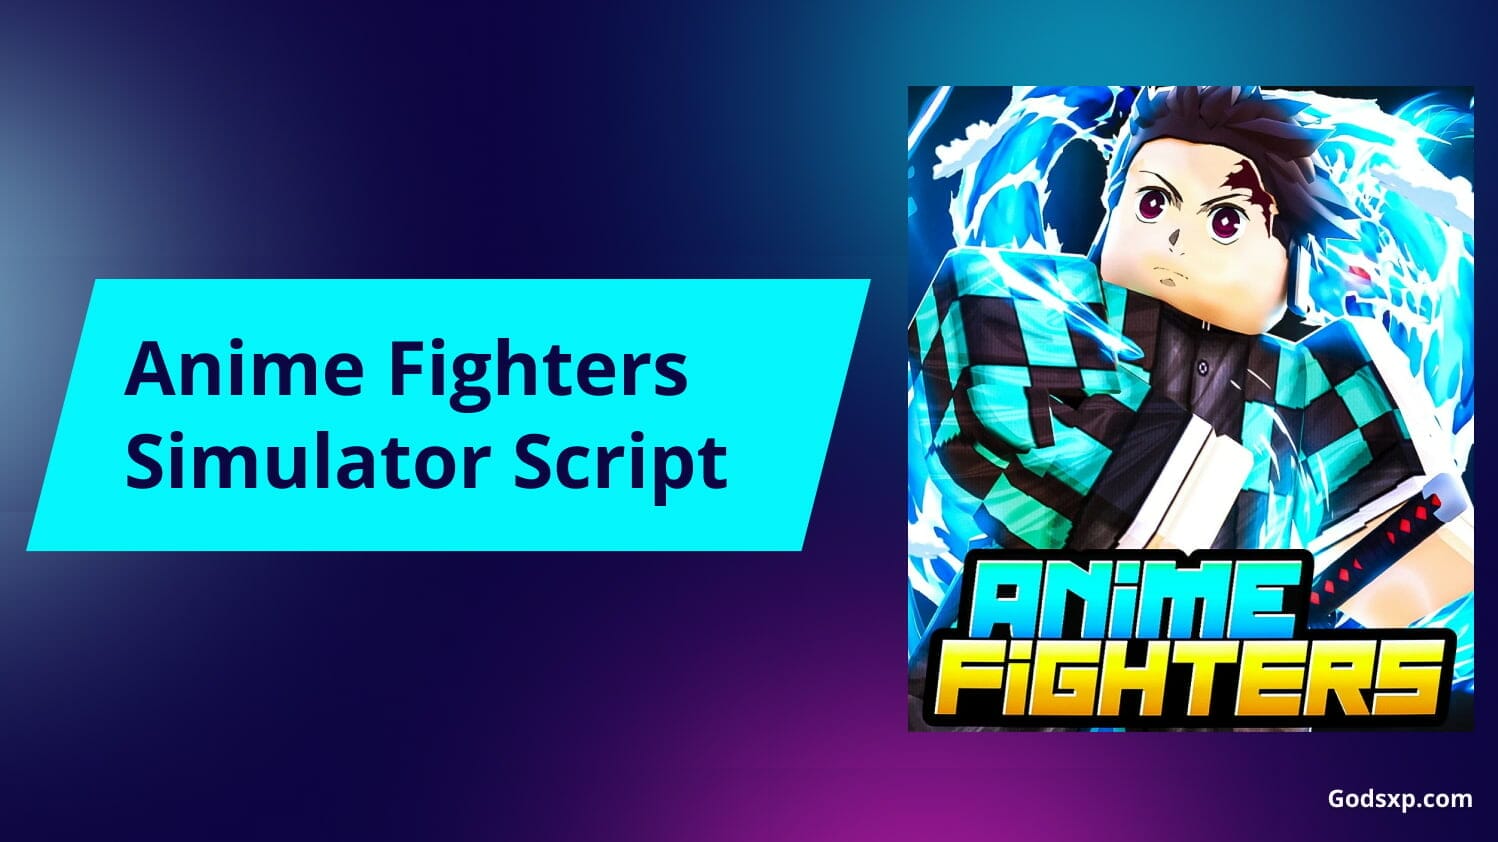 Anime Warriors Simulator 2 SCRIPT